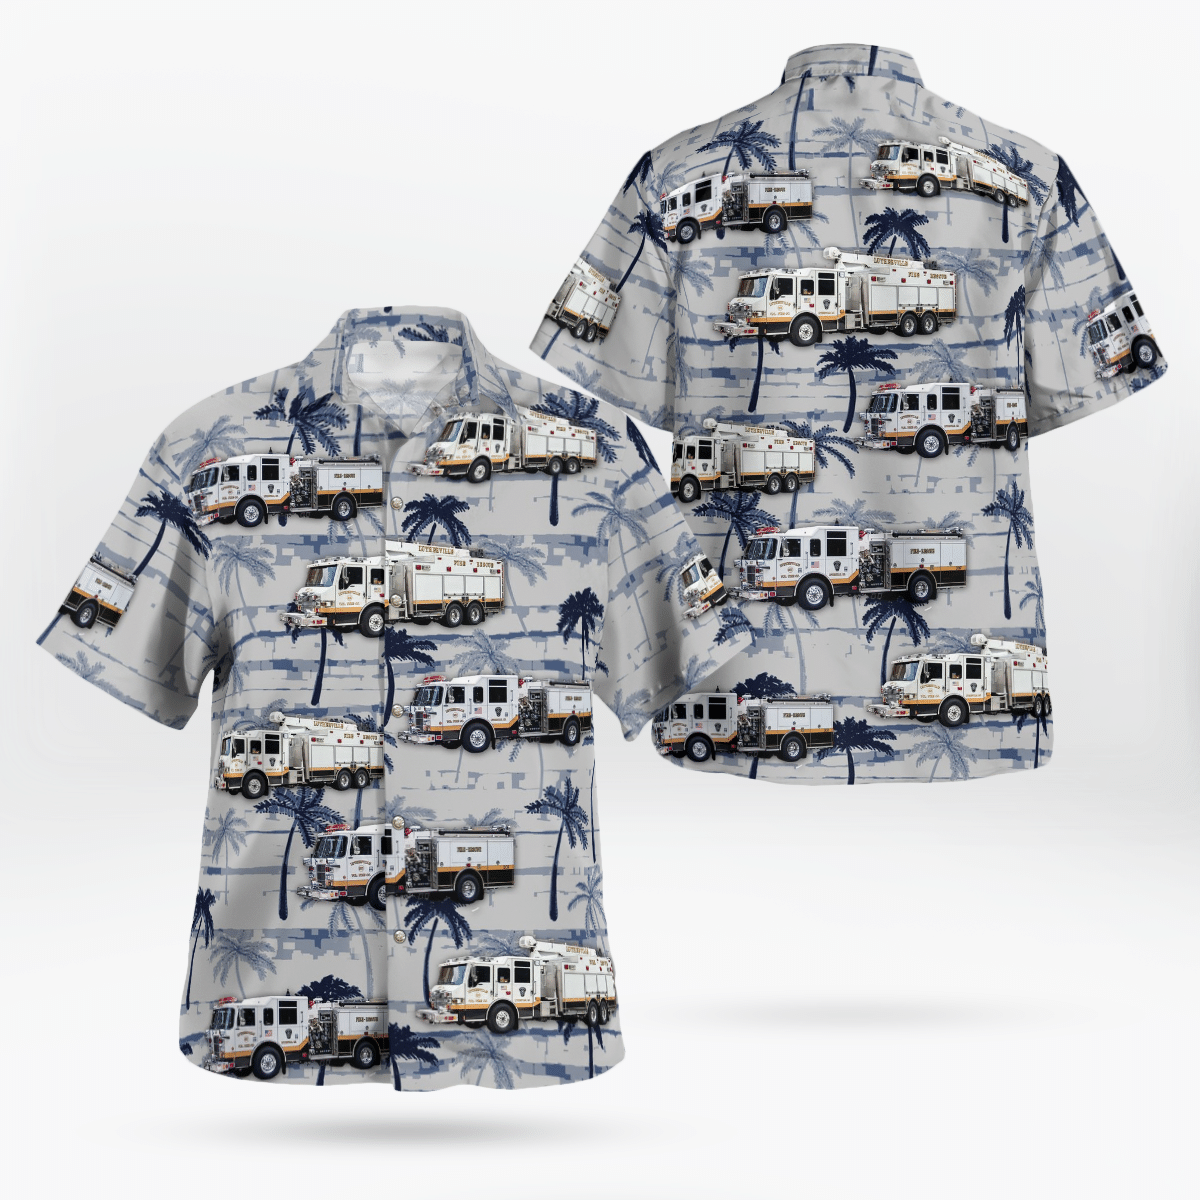 Why don't you order Hot Hawaiian Shirt today? 147